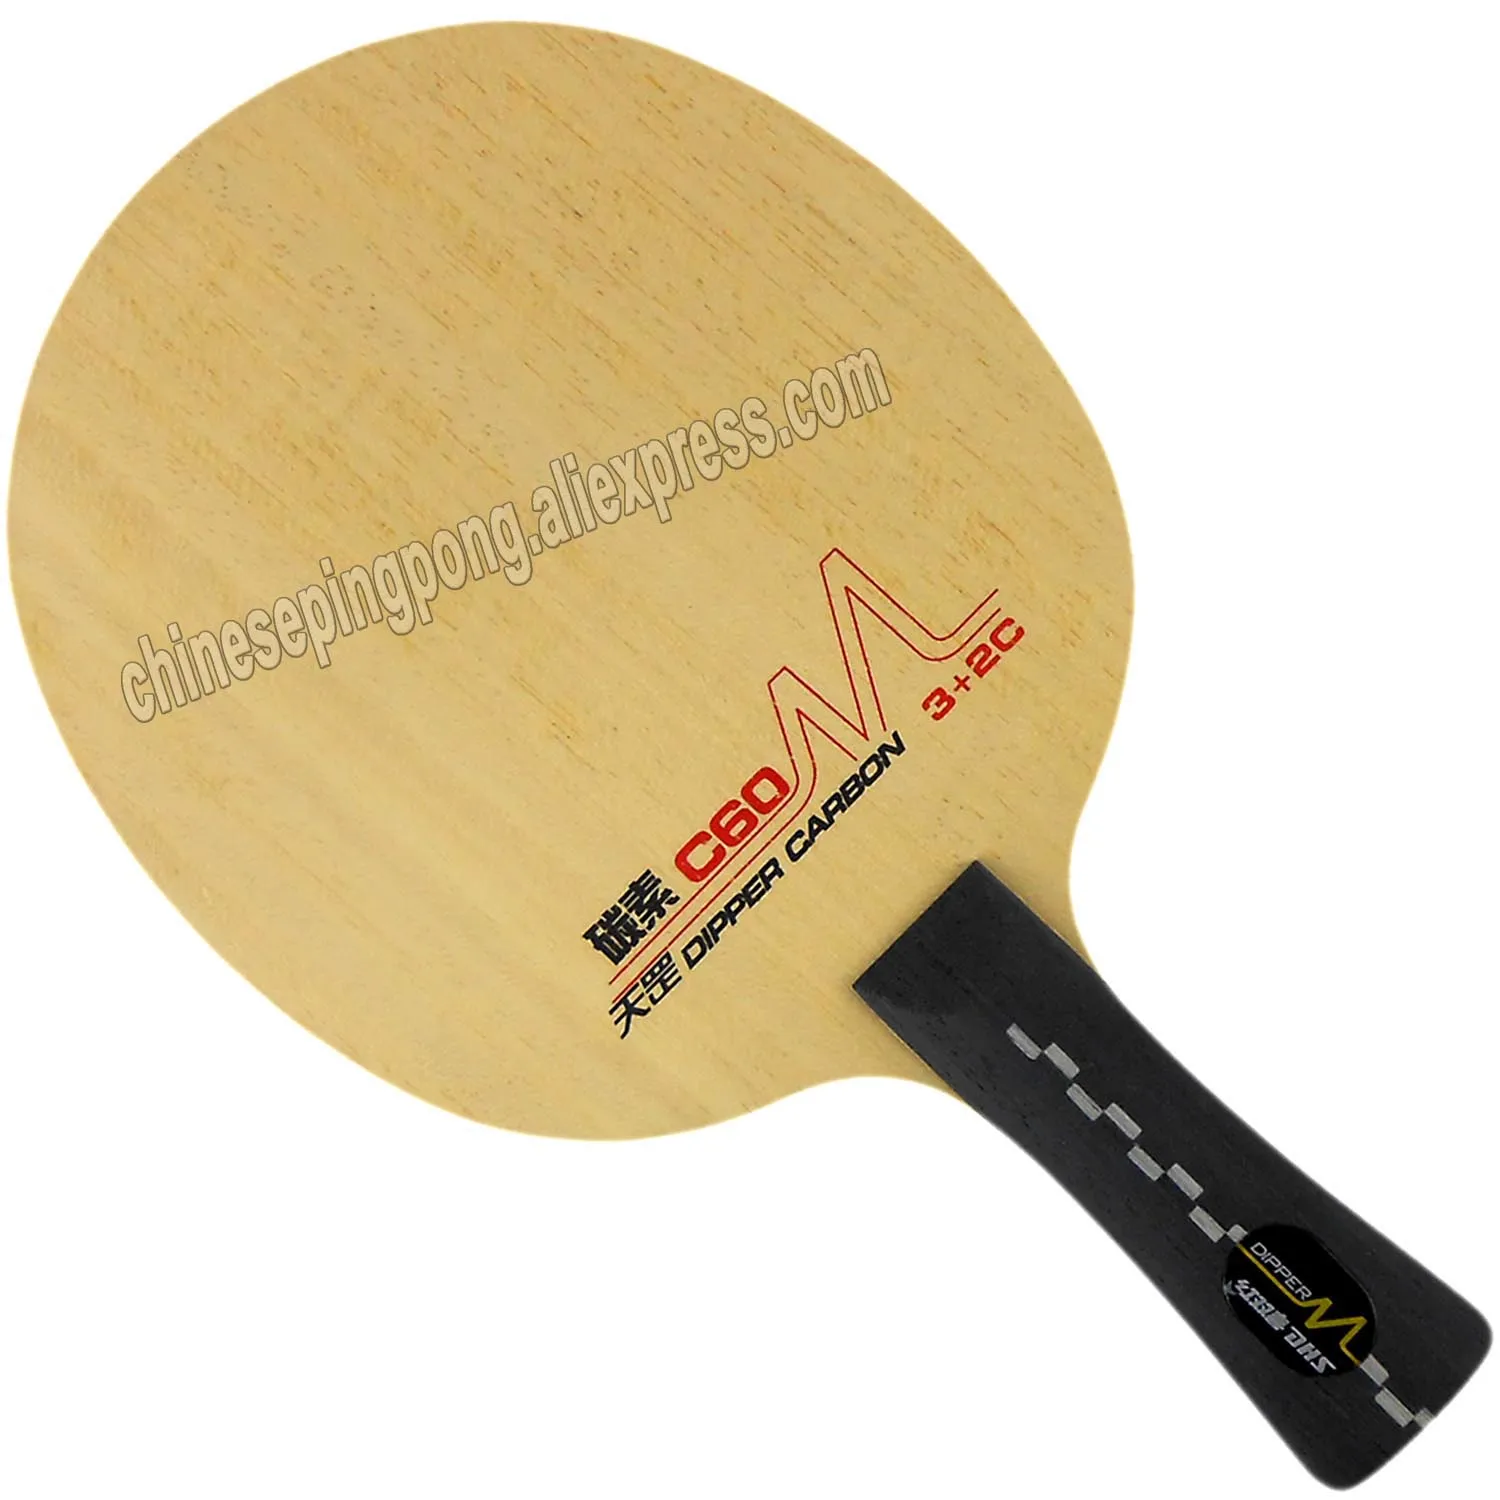 DHS DM.C60 Table Tennis Blade for PingPong Racket shakehand long handle FL